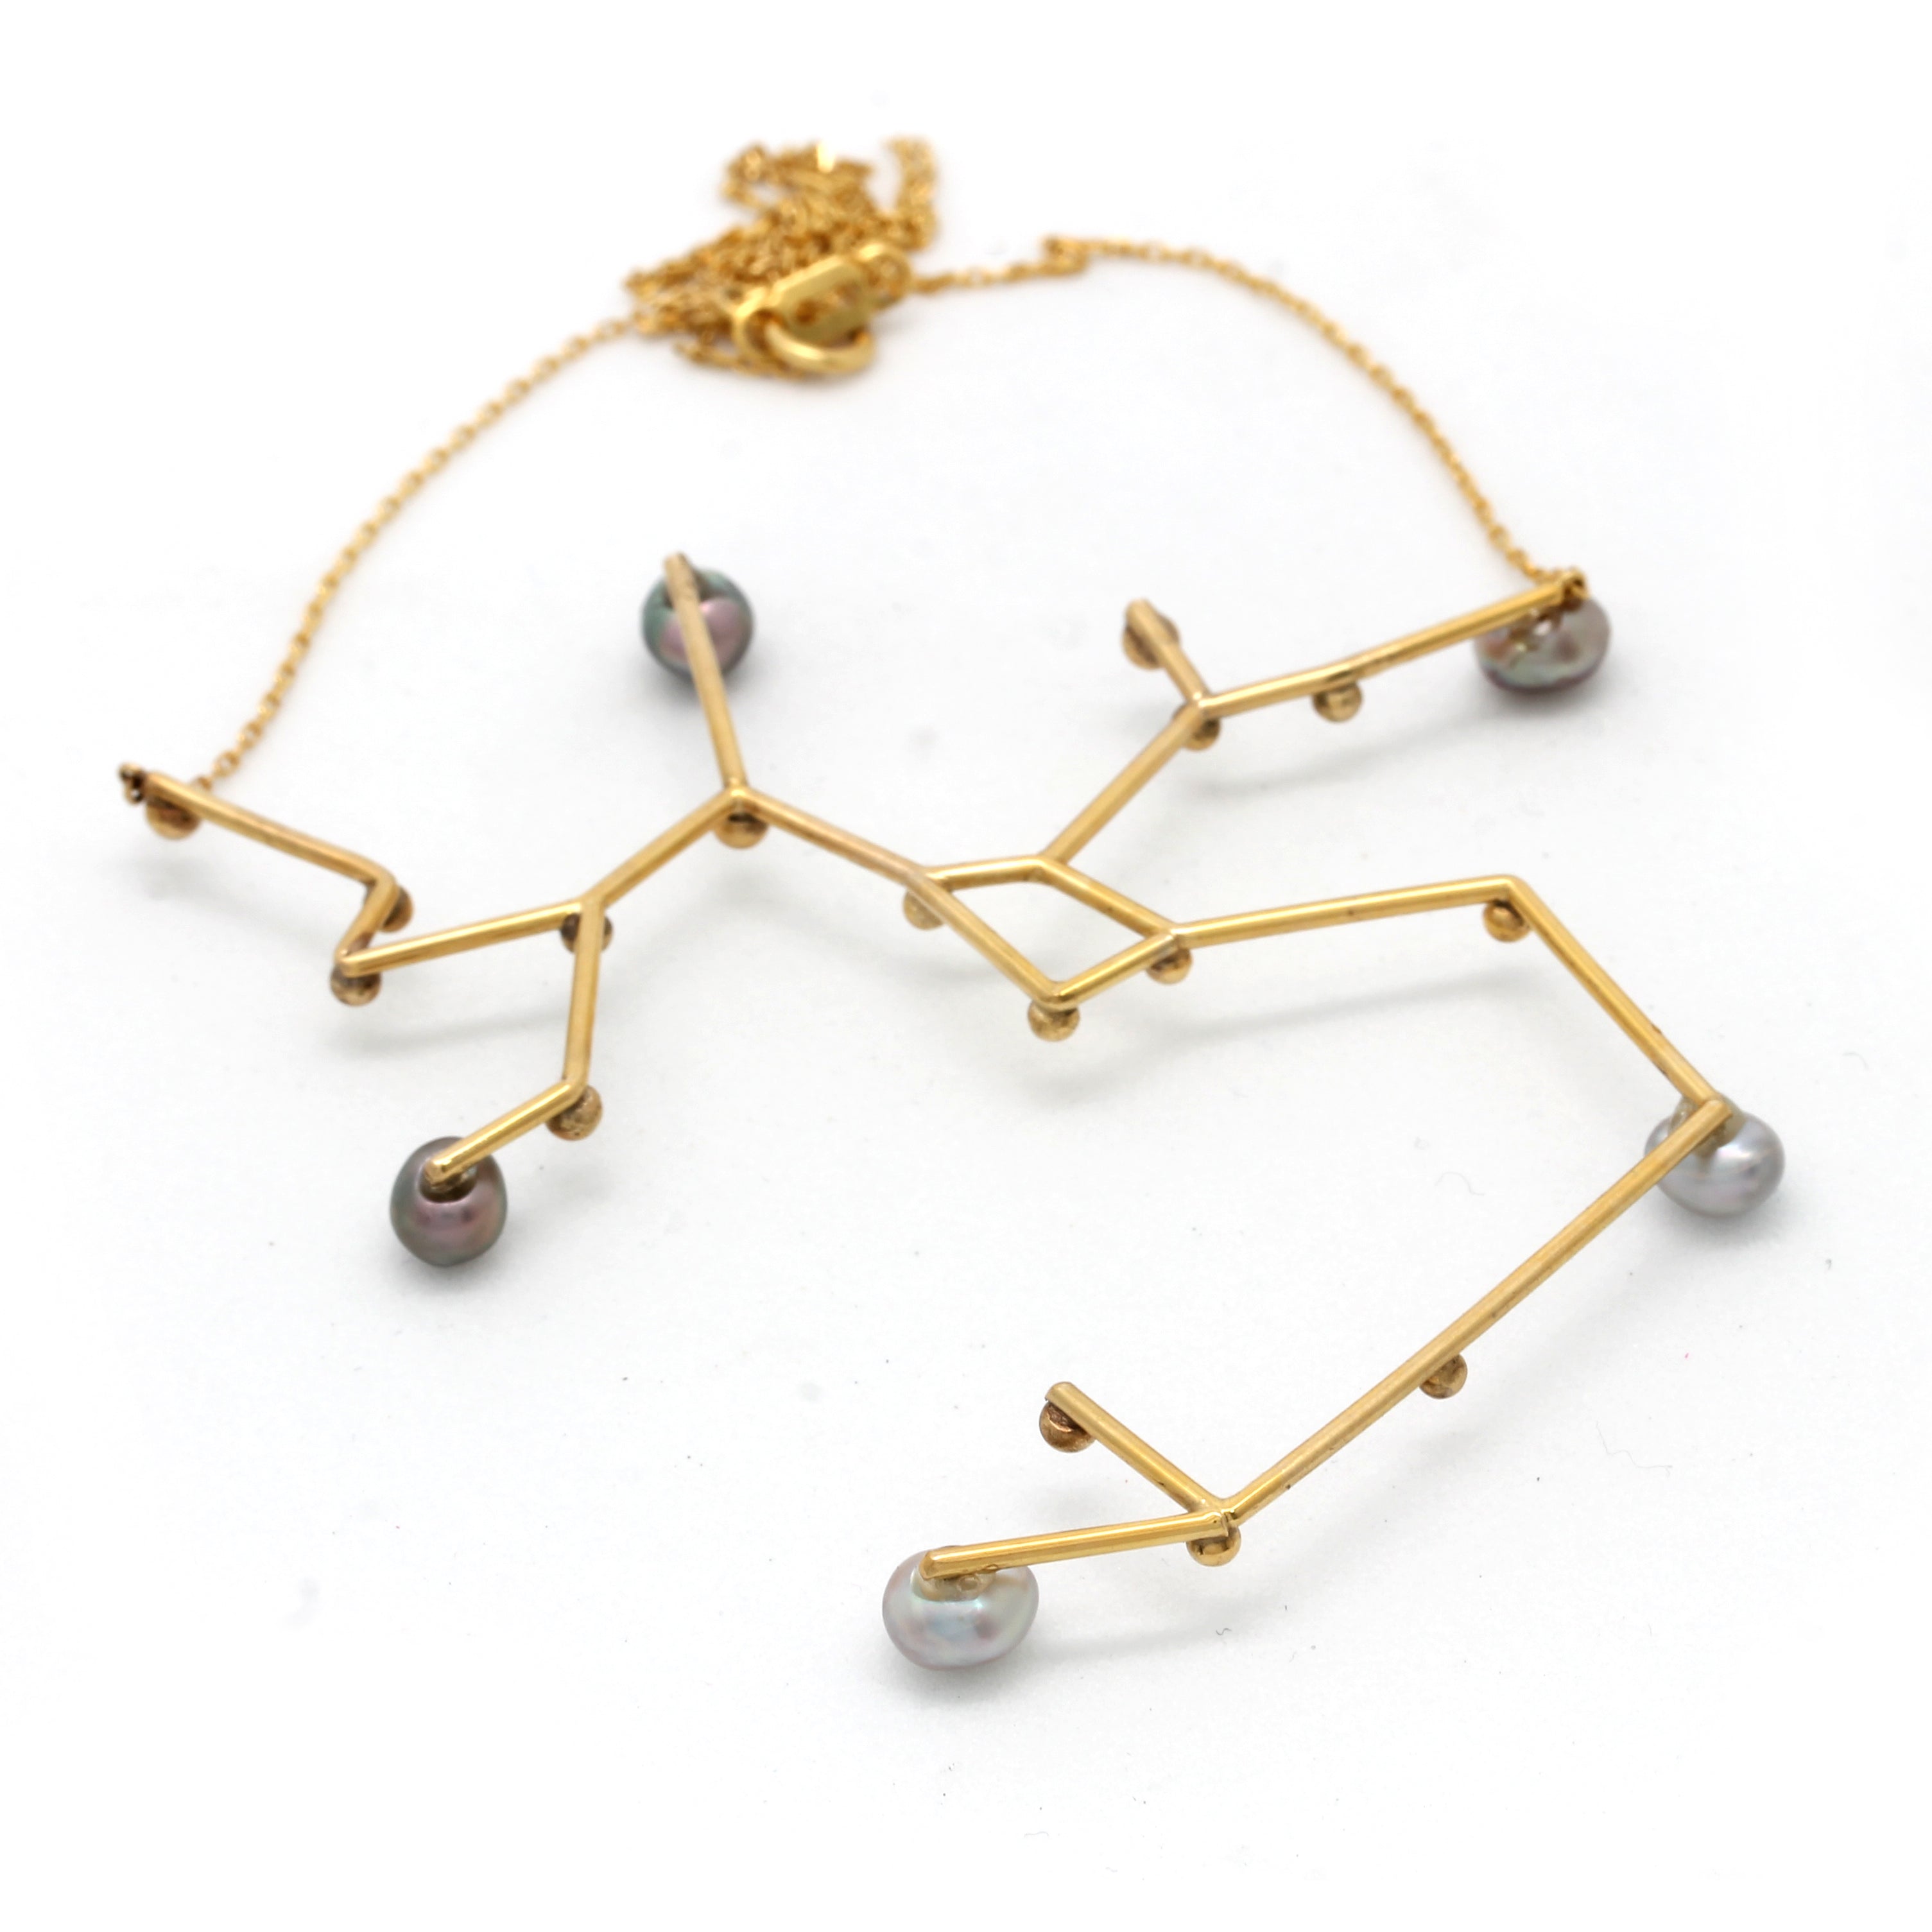 "Sagittarius (Nov 22th - Dec 21th)" 14K Yellow Gold Pendant and Chain with Cortez Keshi Pearls